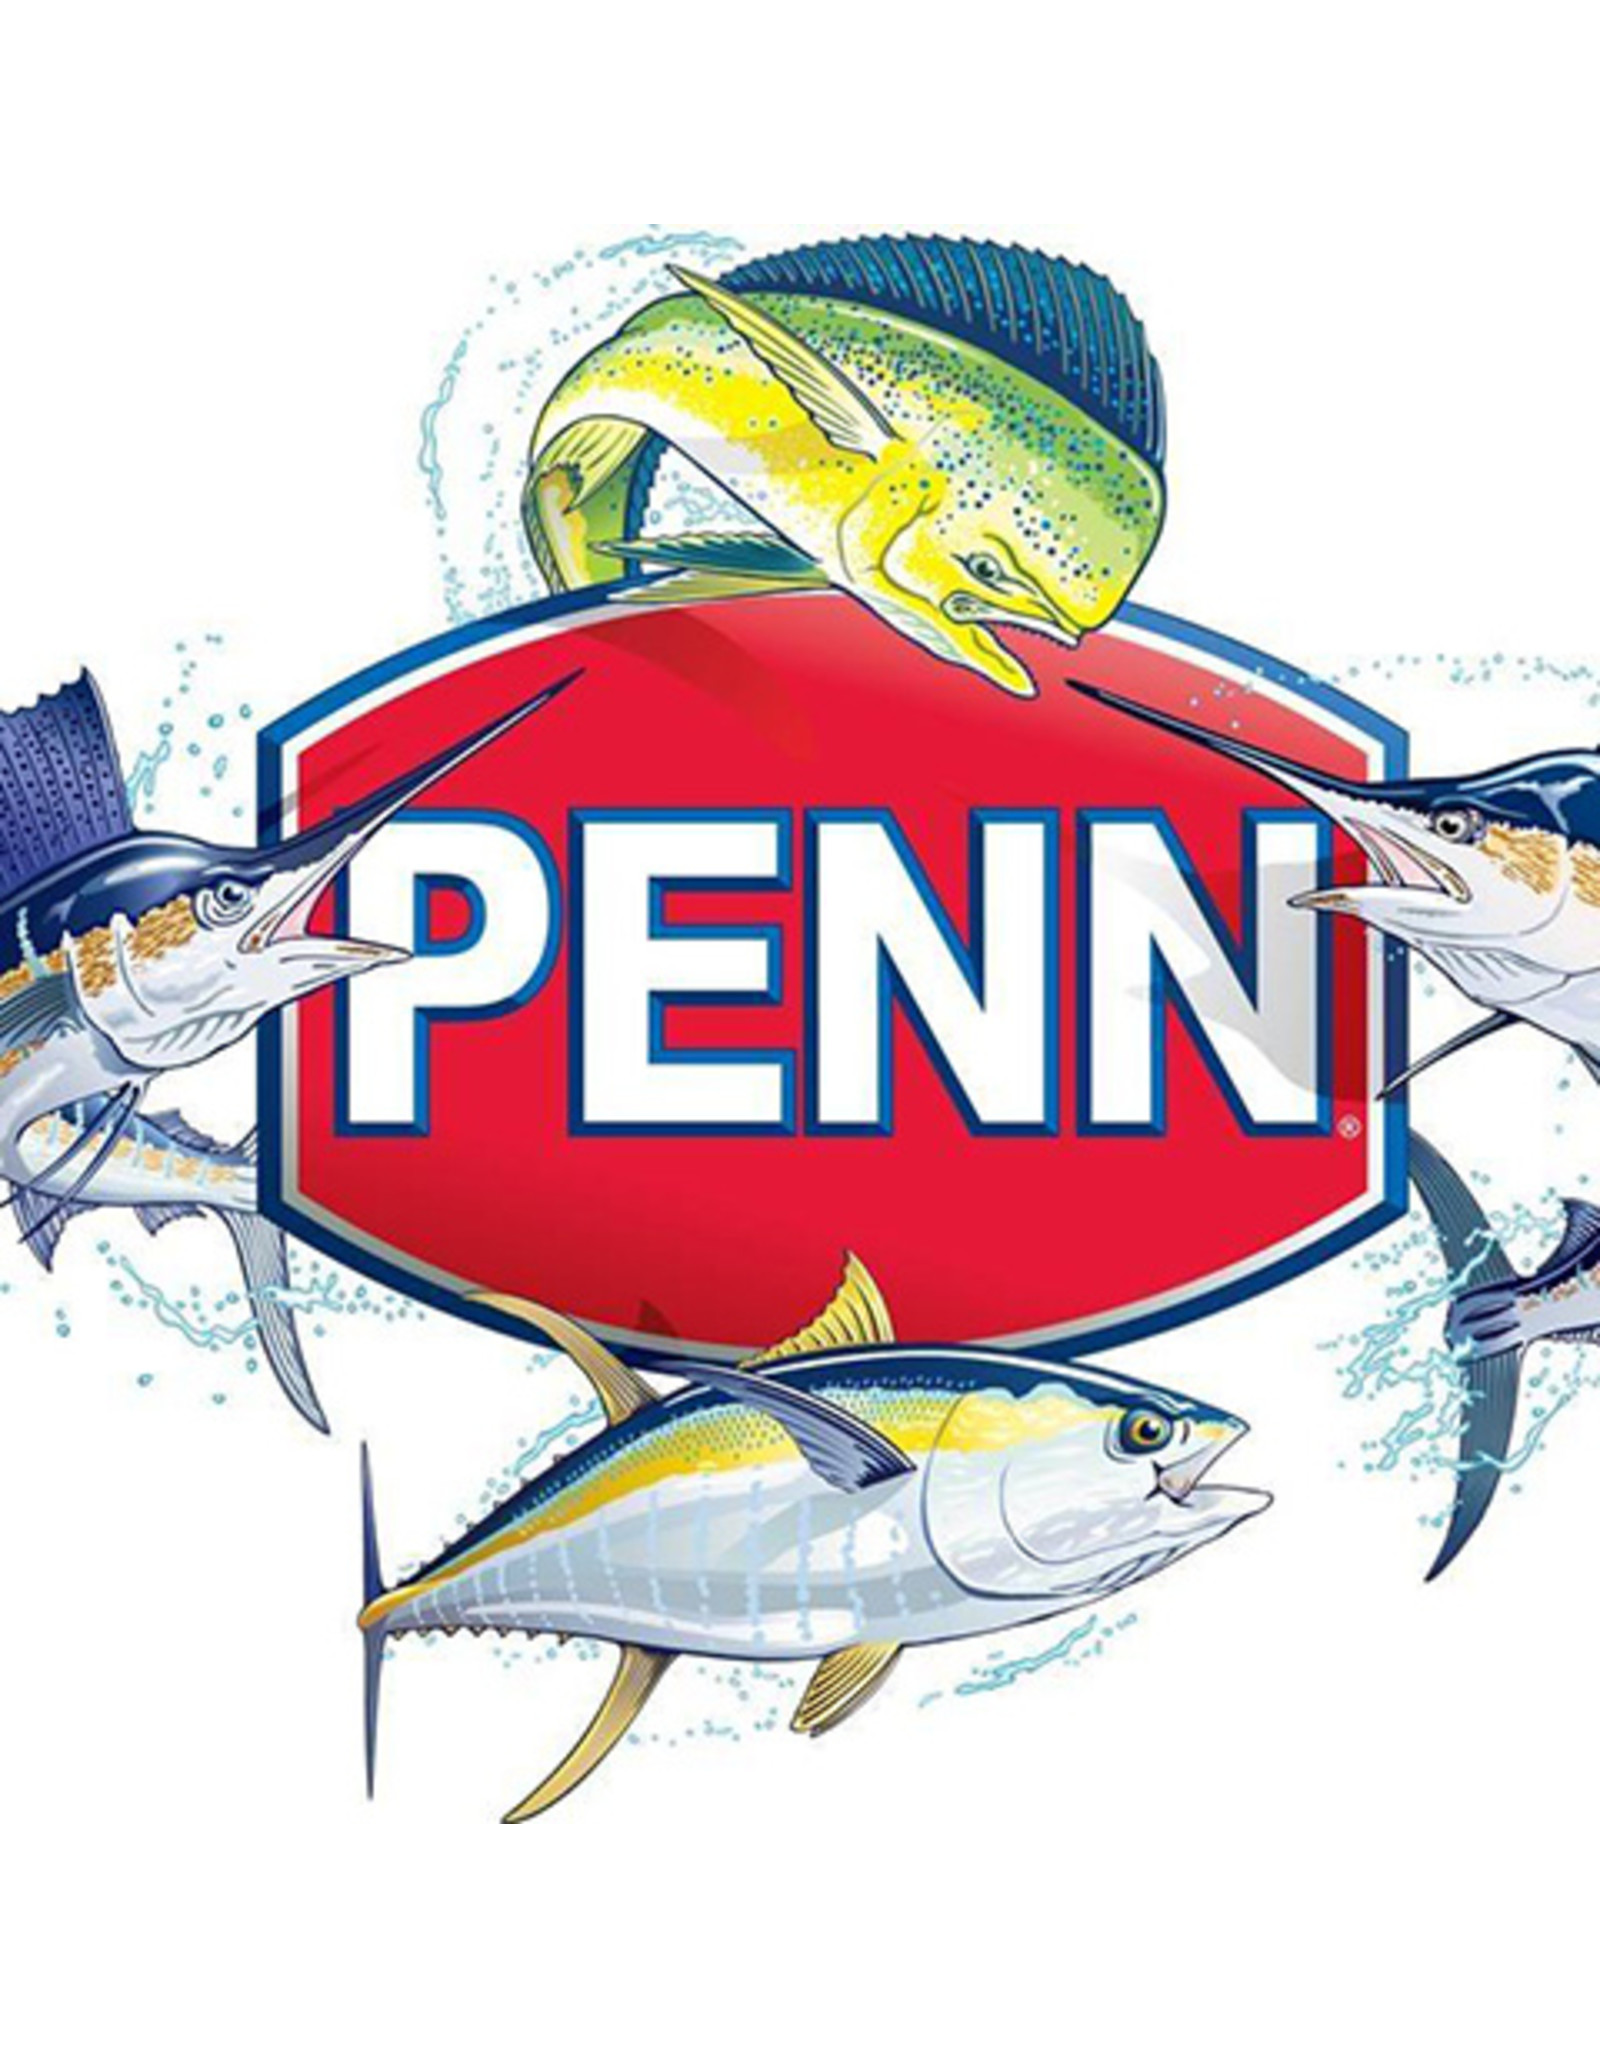 Penn 63-330  CLICK SPRING SCREW/ NLA